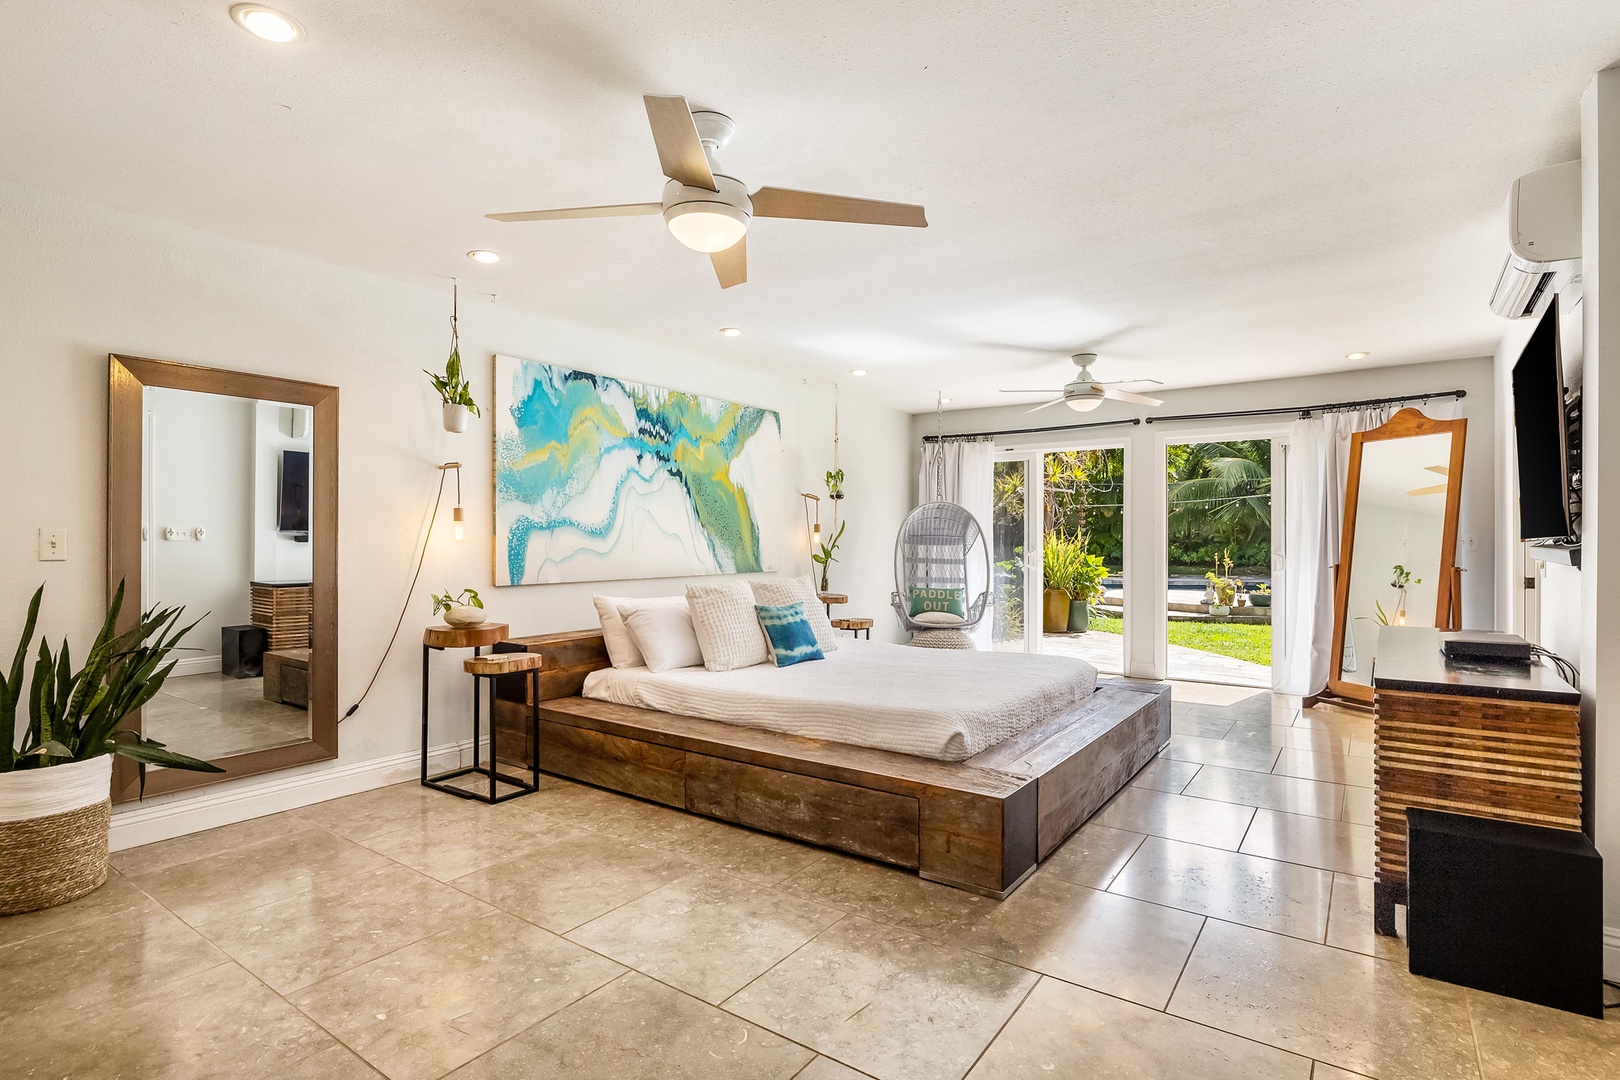 Honolulu Vacation Rentals, Hale Ho'omaha - The Primary Bedroom is beautifully designed